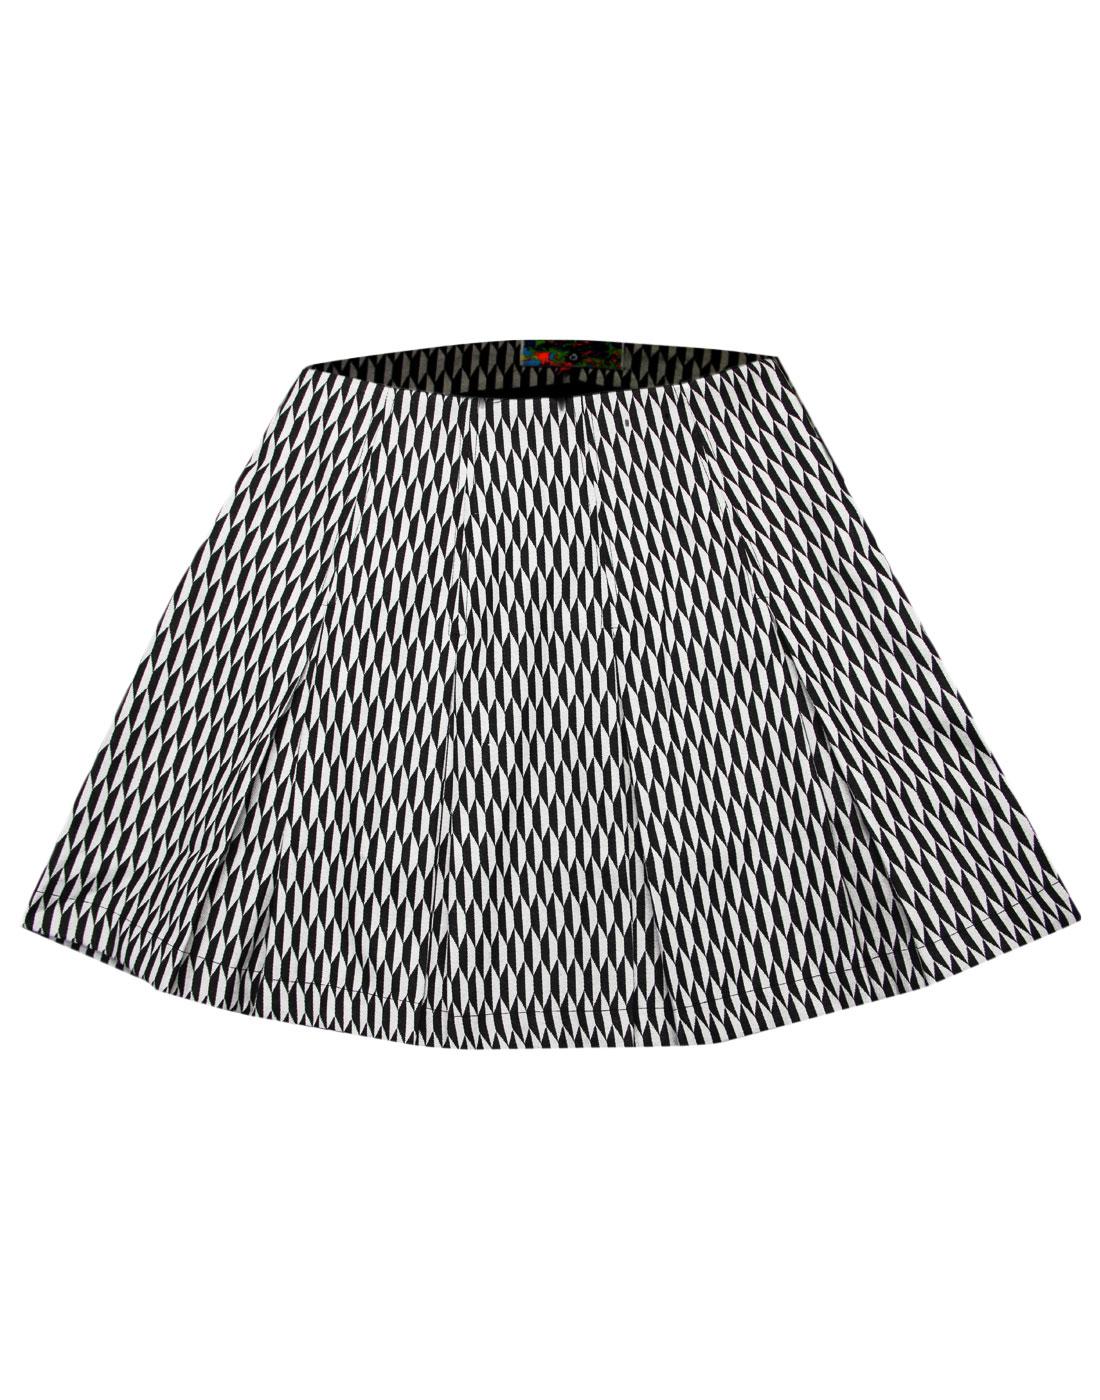 MADCAP ENGLAND Ace 60s Mod Harlequin Pleat Tennis Skirt